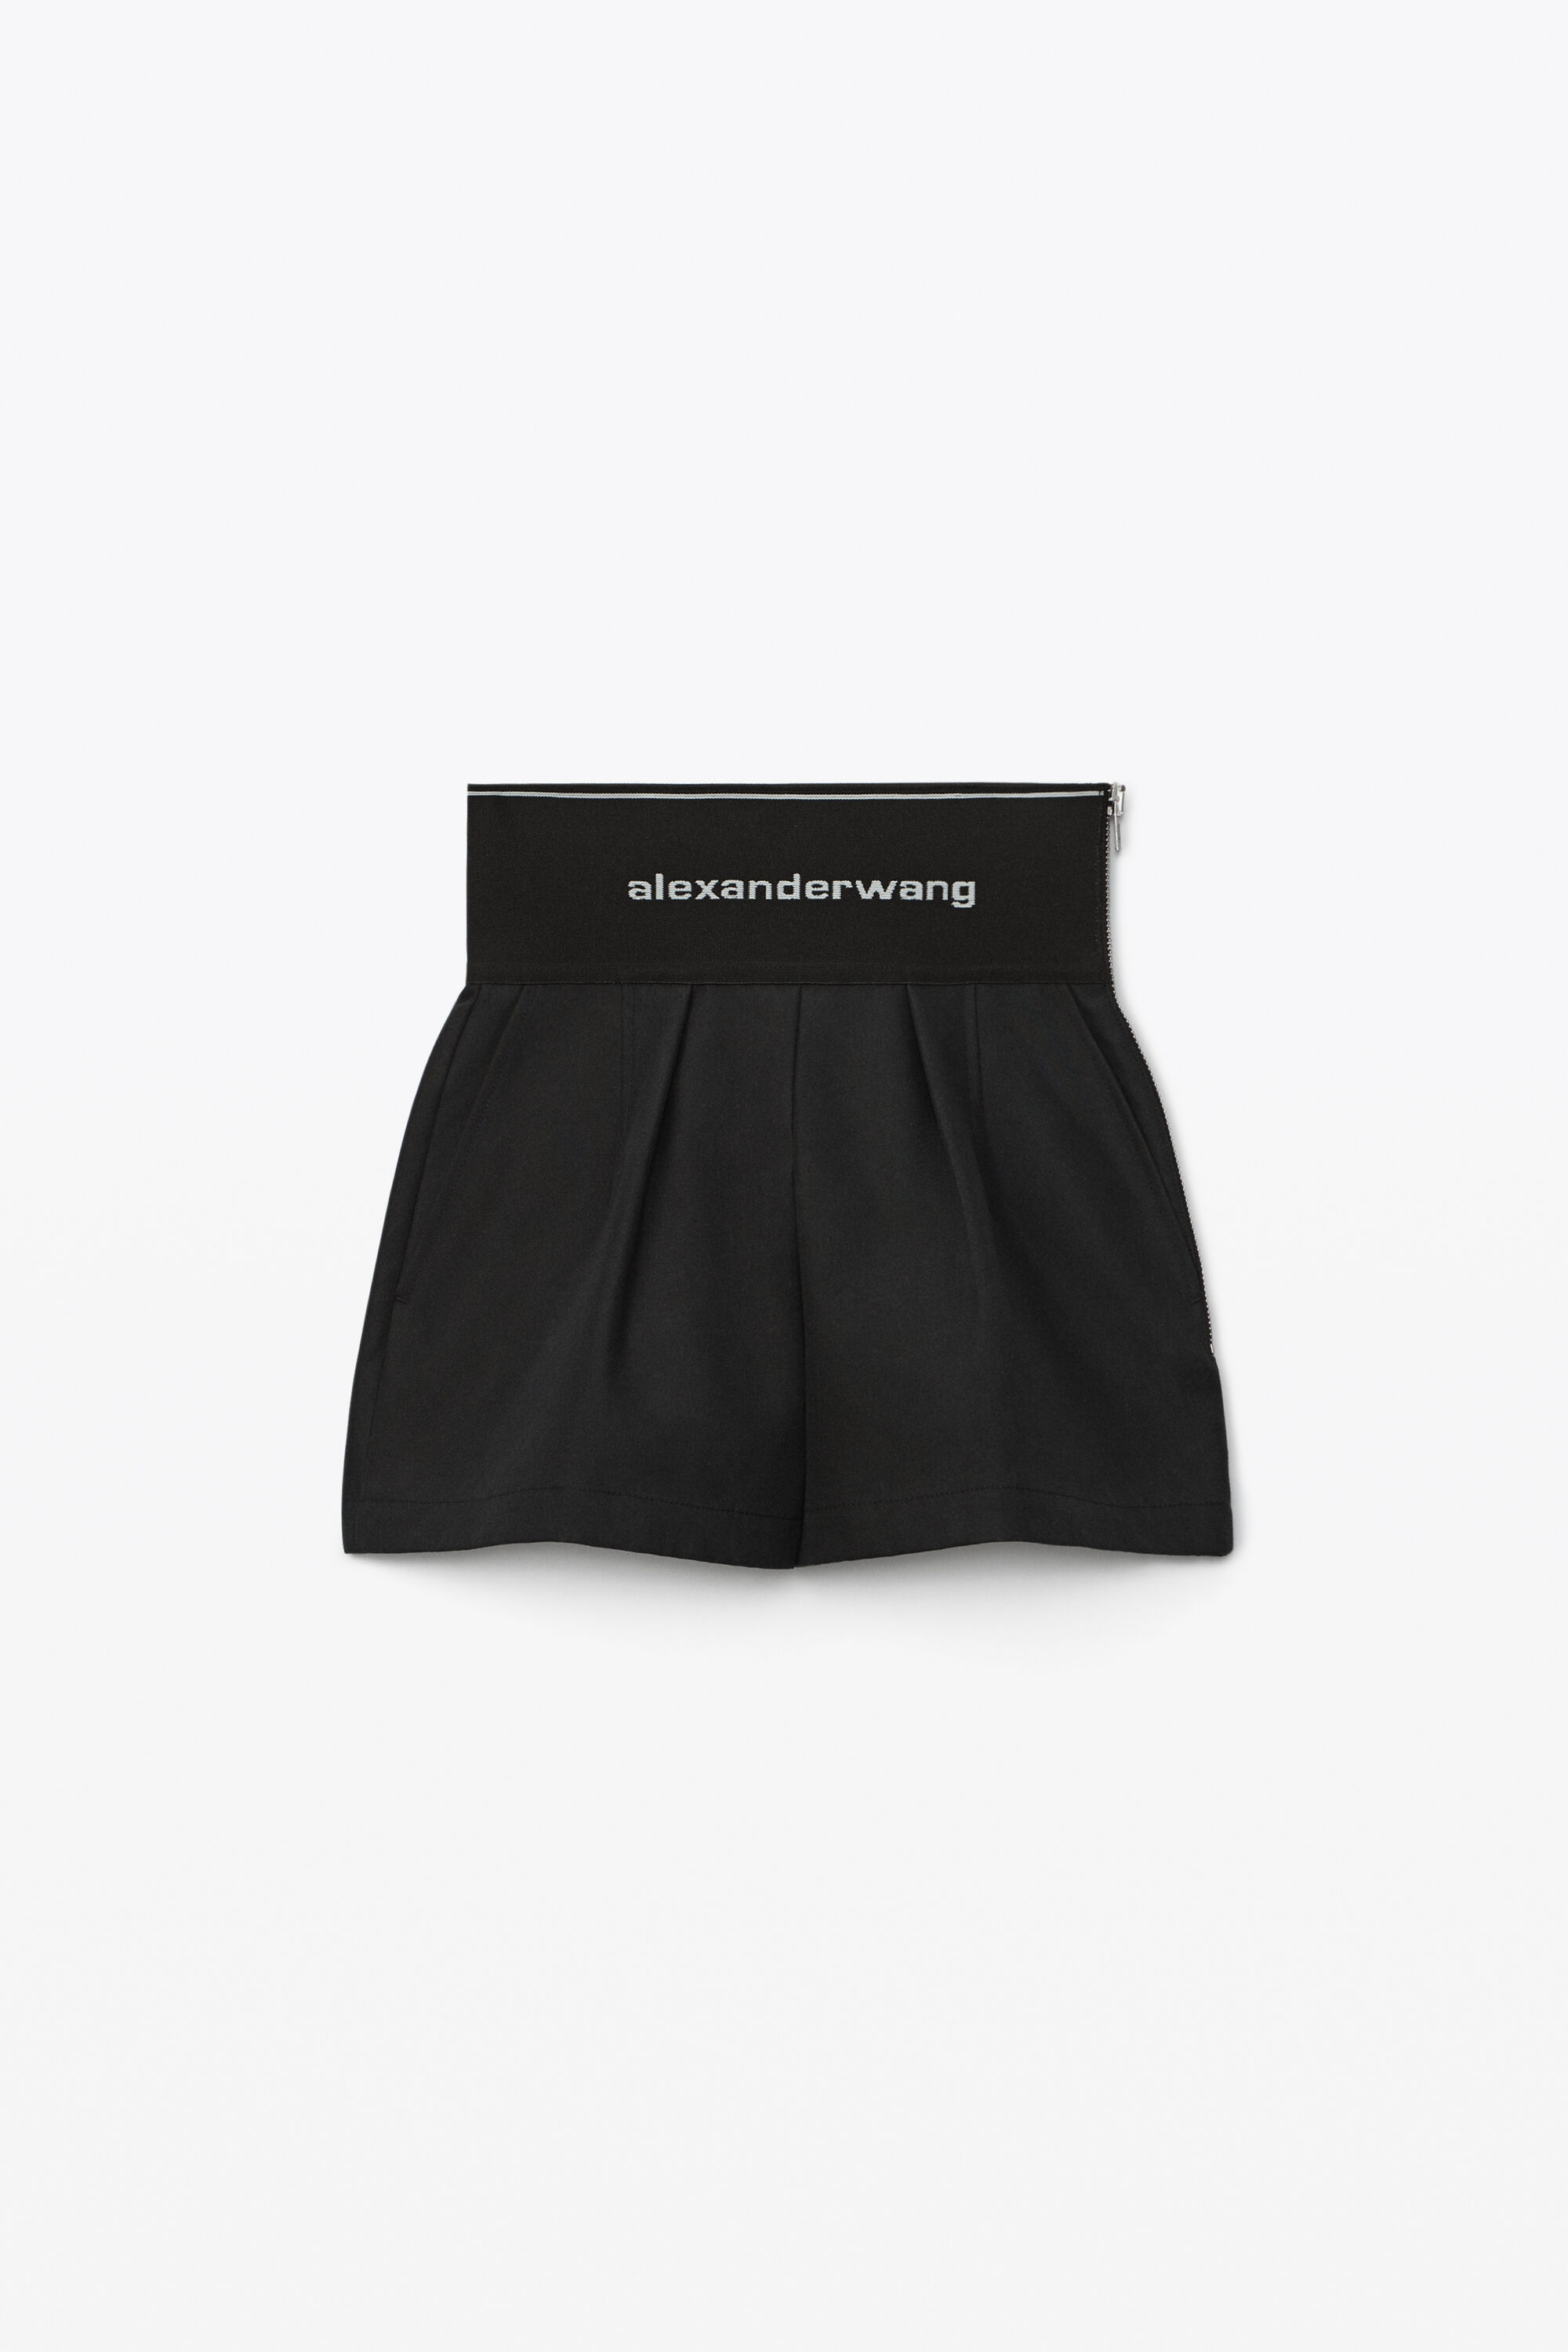 br>ALEXANDER WANG <br>｢Logo Safari Shorts｣サファリショーツ